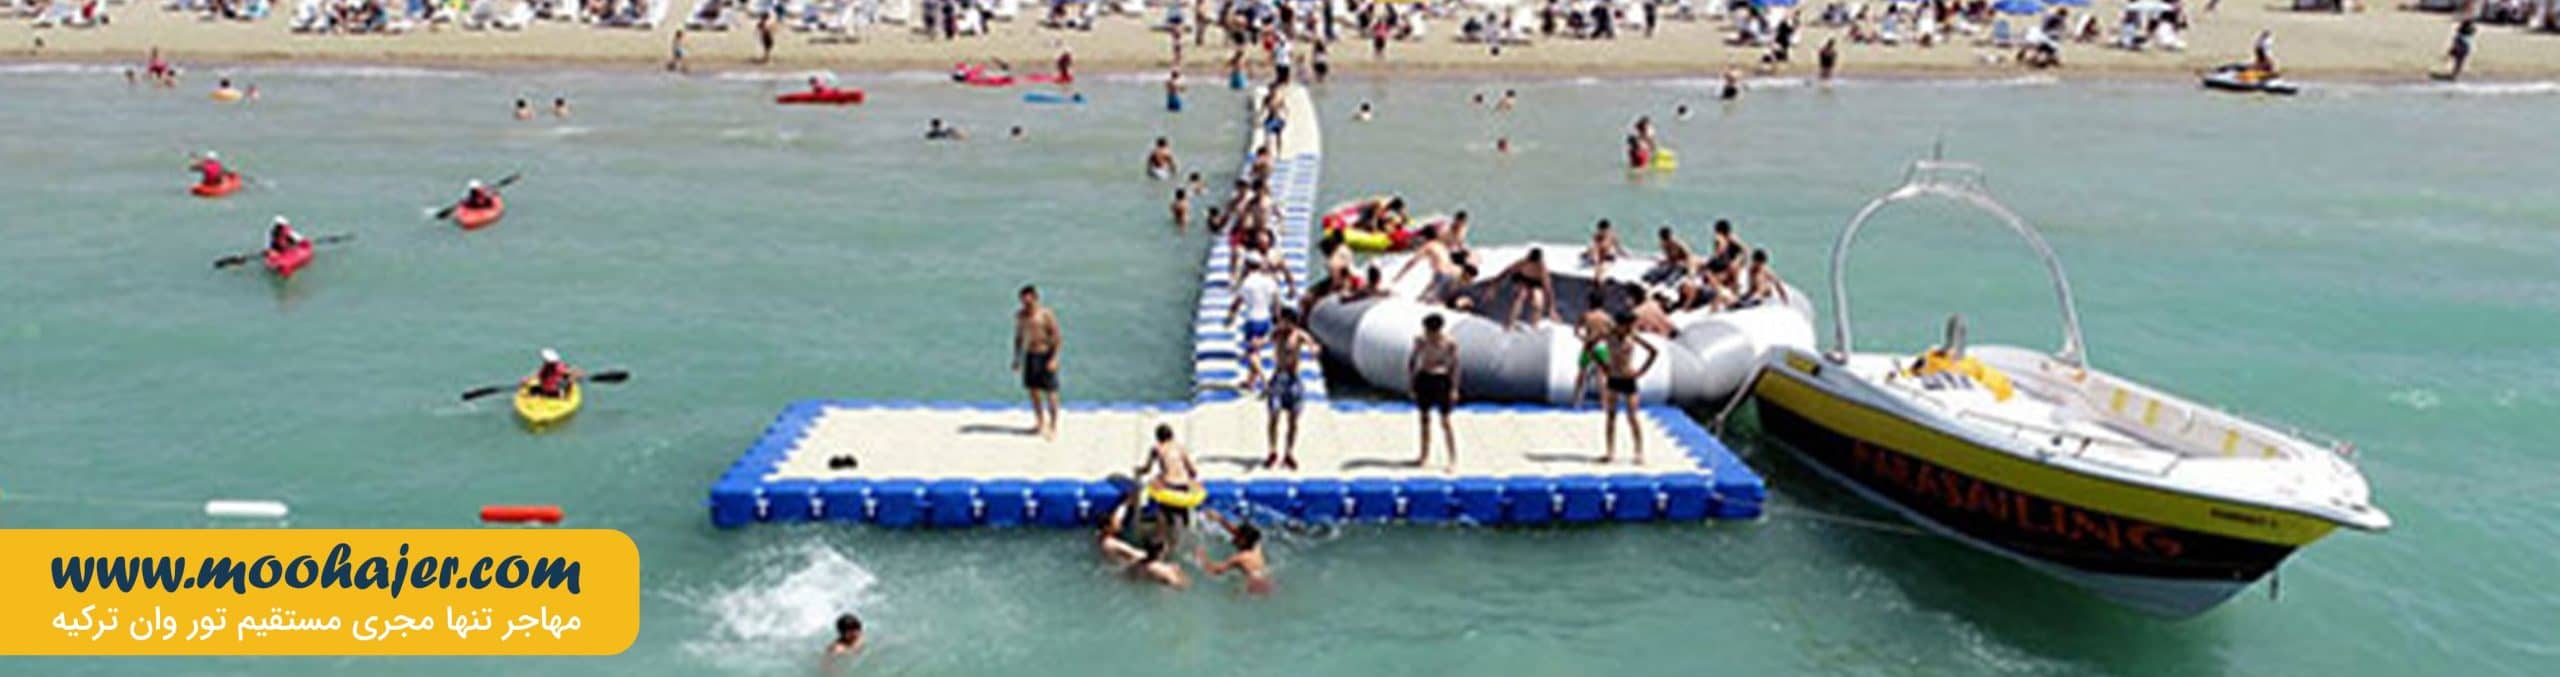 پلاژ های وان | Edremit Halk Plajı | ساحل وان ترکیه